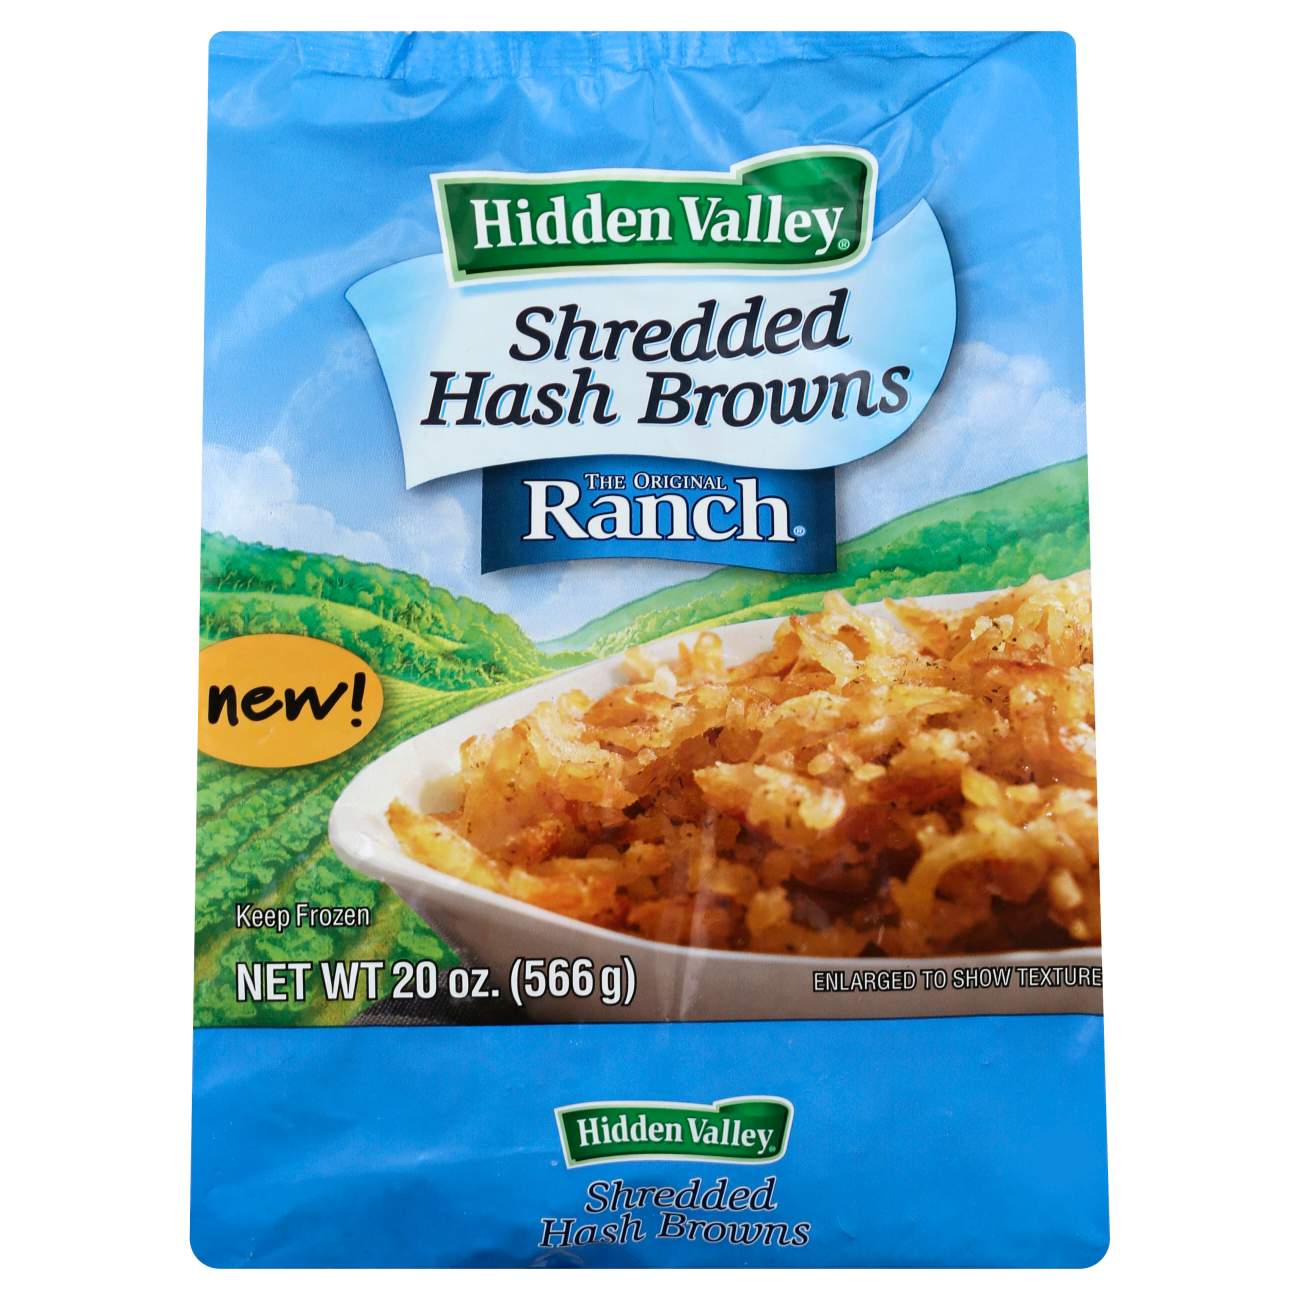 Hidden Valley Shredded Hash Browns; image 1 of 2